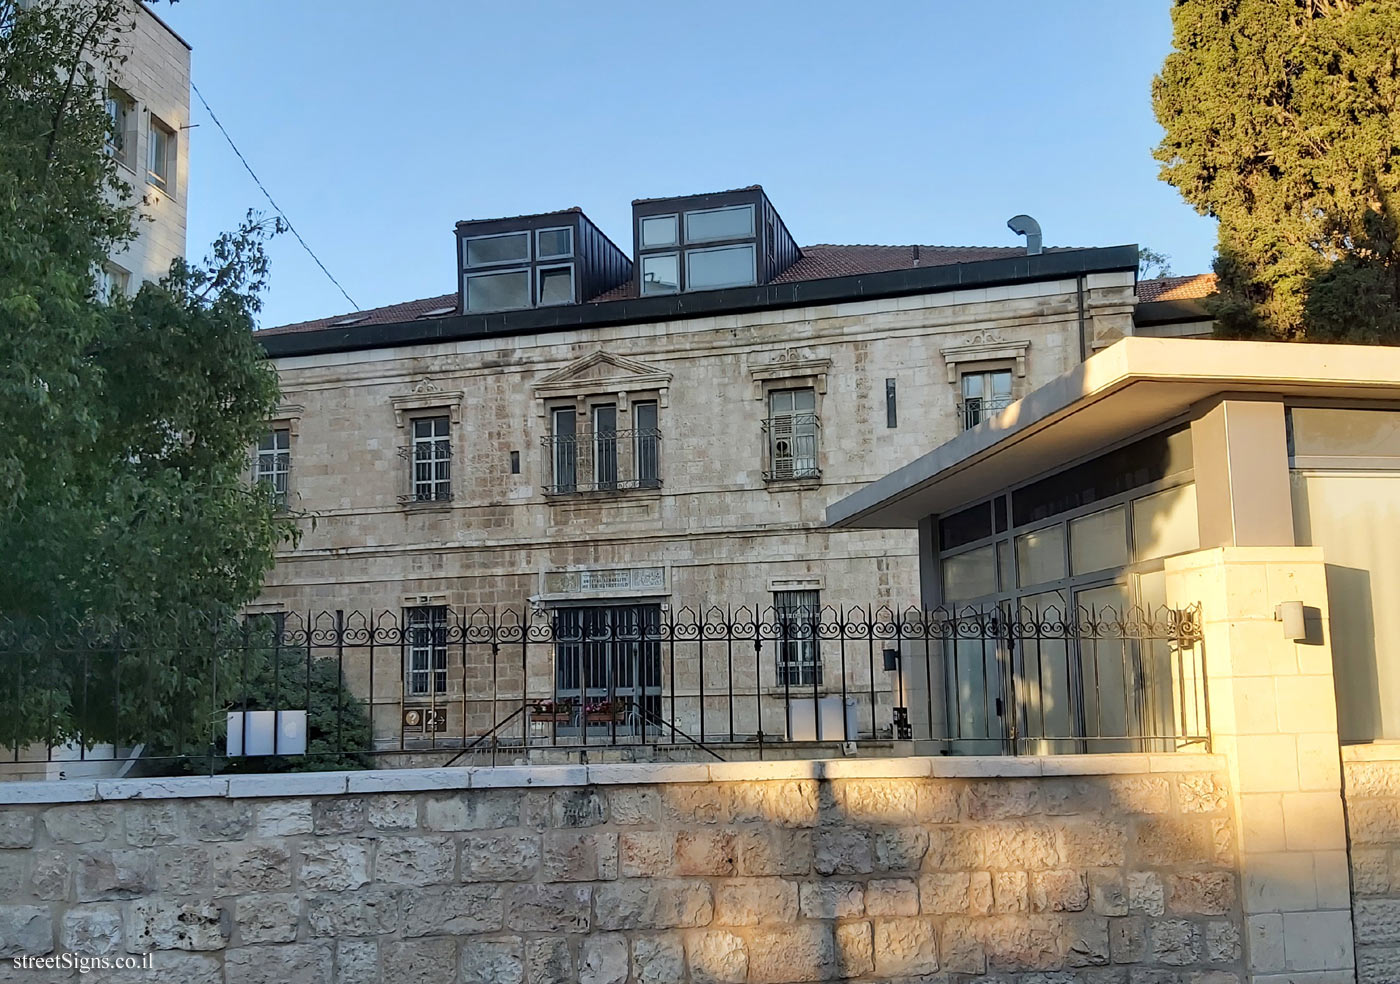 Jerusalem - The Built Heritage - Rothschild Hospital - Ha-Nevi’im St 37, Jerusalem, Israel